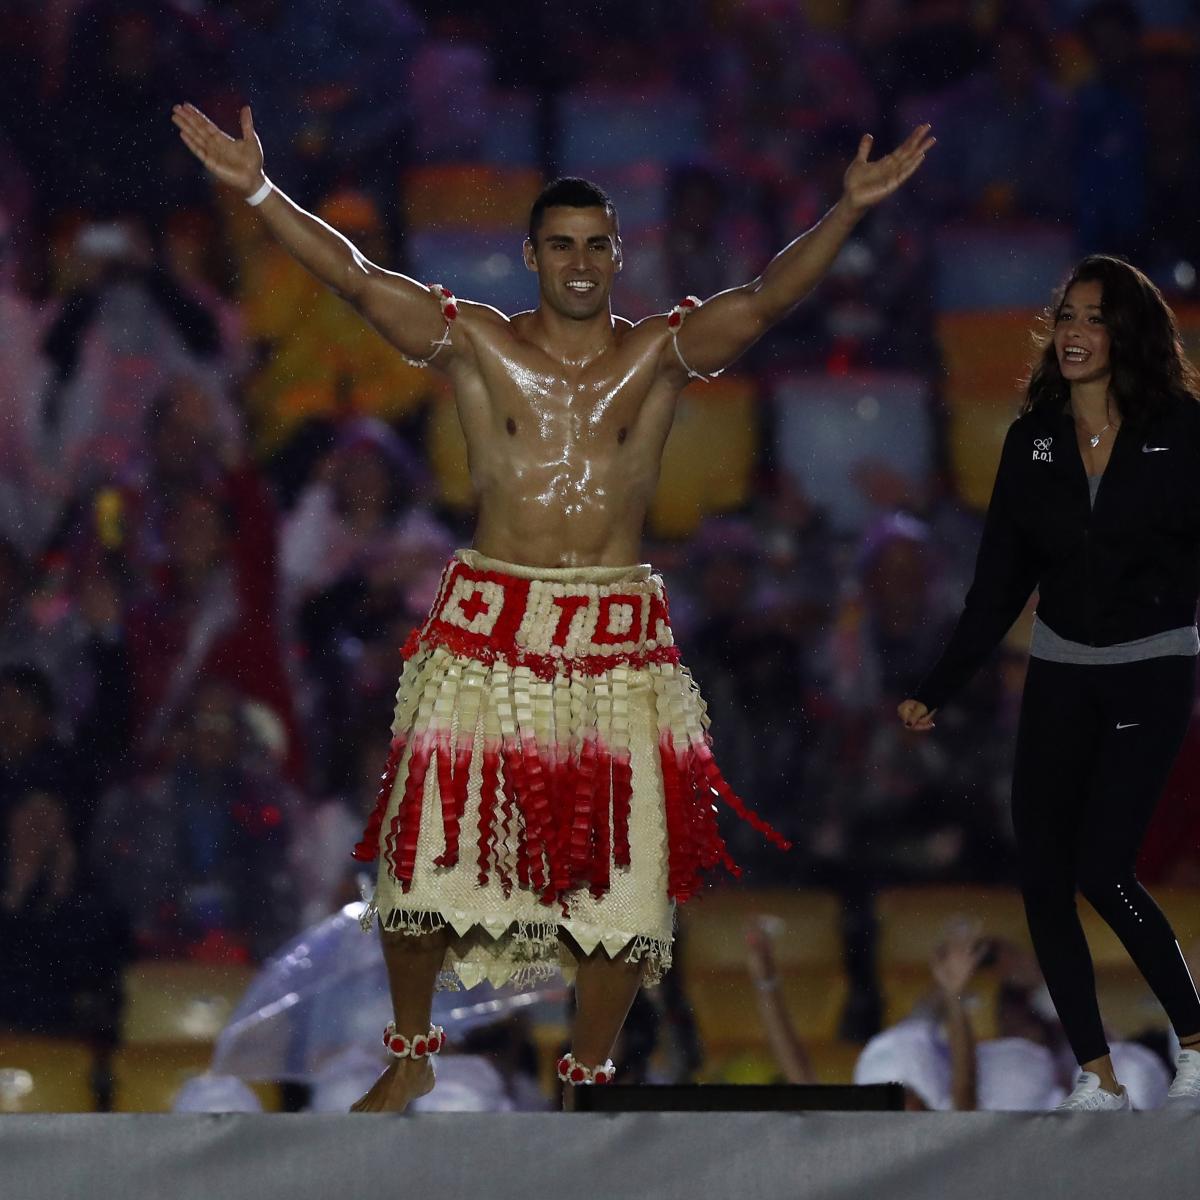 Tongan flag-bearer qualifies for 2018 Olympics